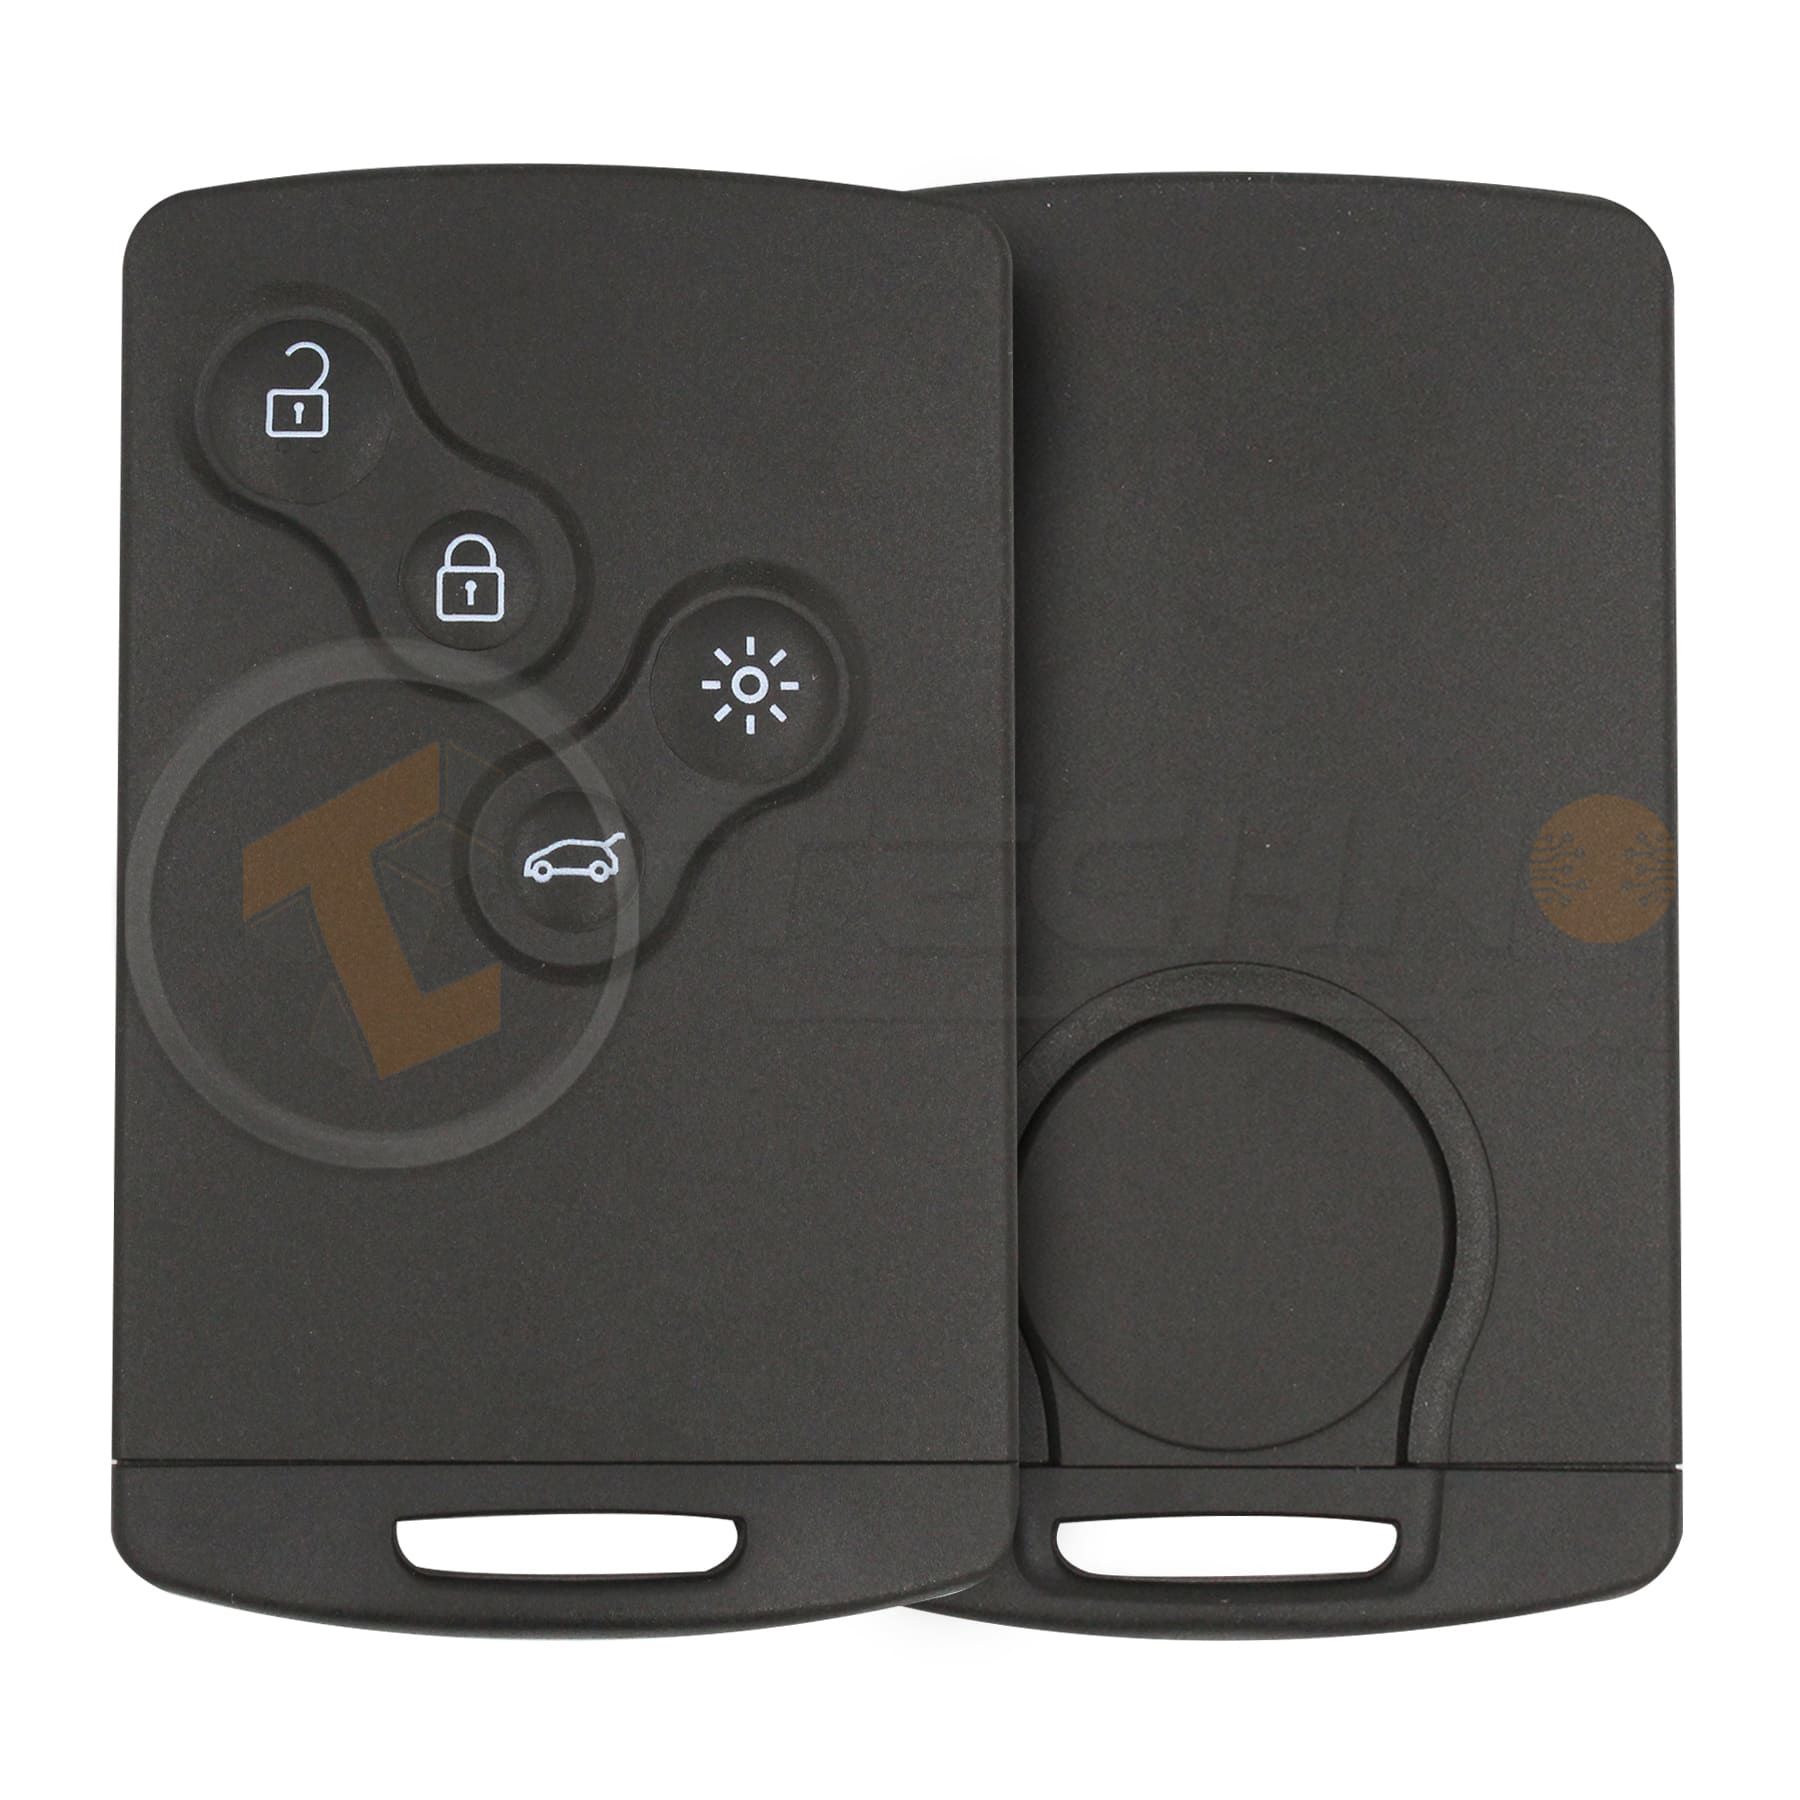 Renault Fluence MEGANE 3 Smart Proximity 433MHz 4 Buttons Remote Type Smart Proximity